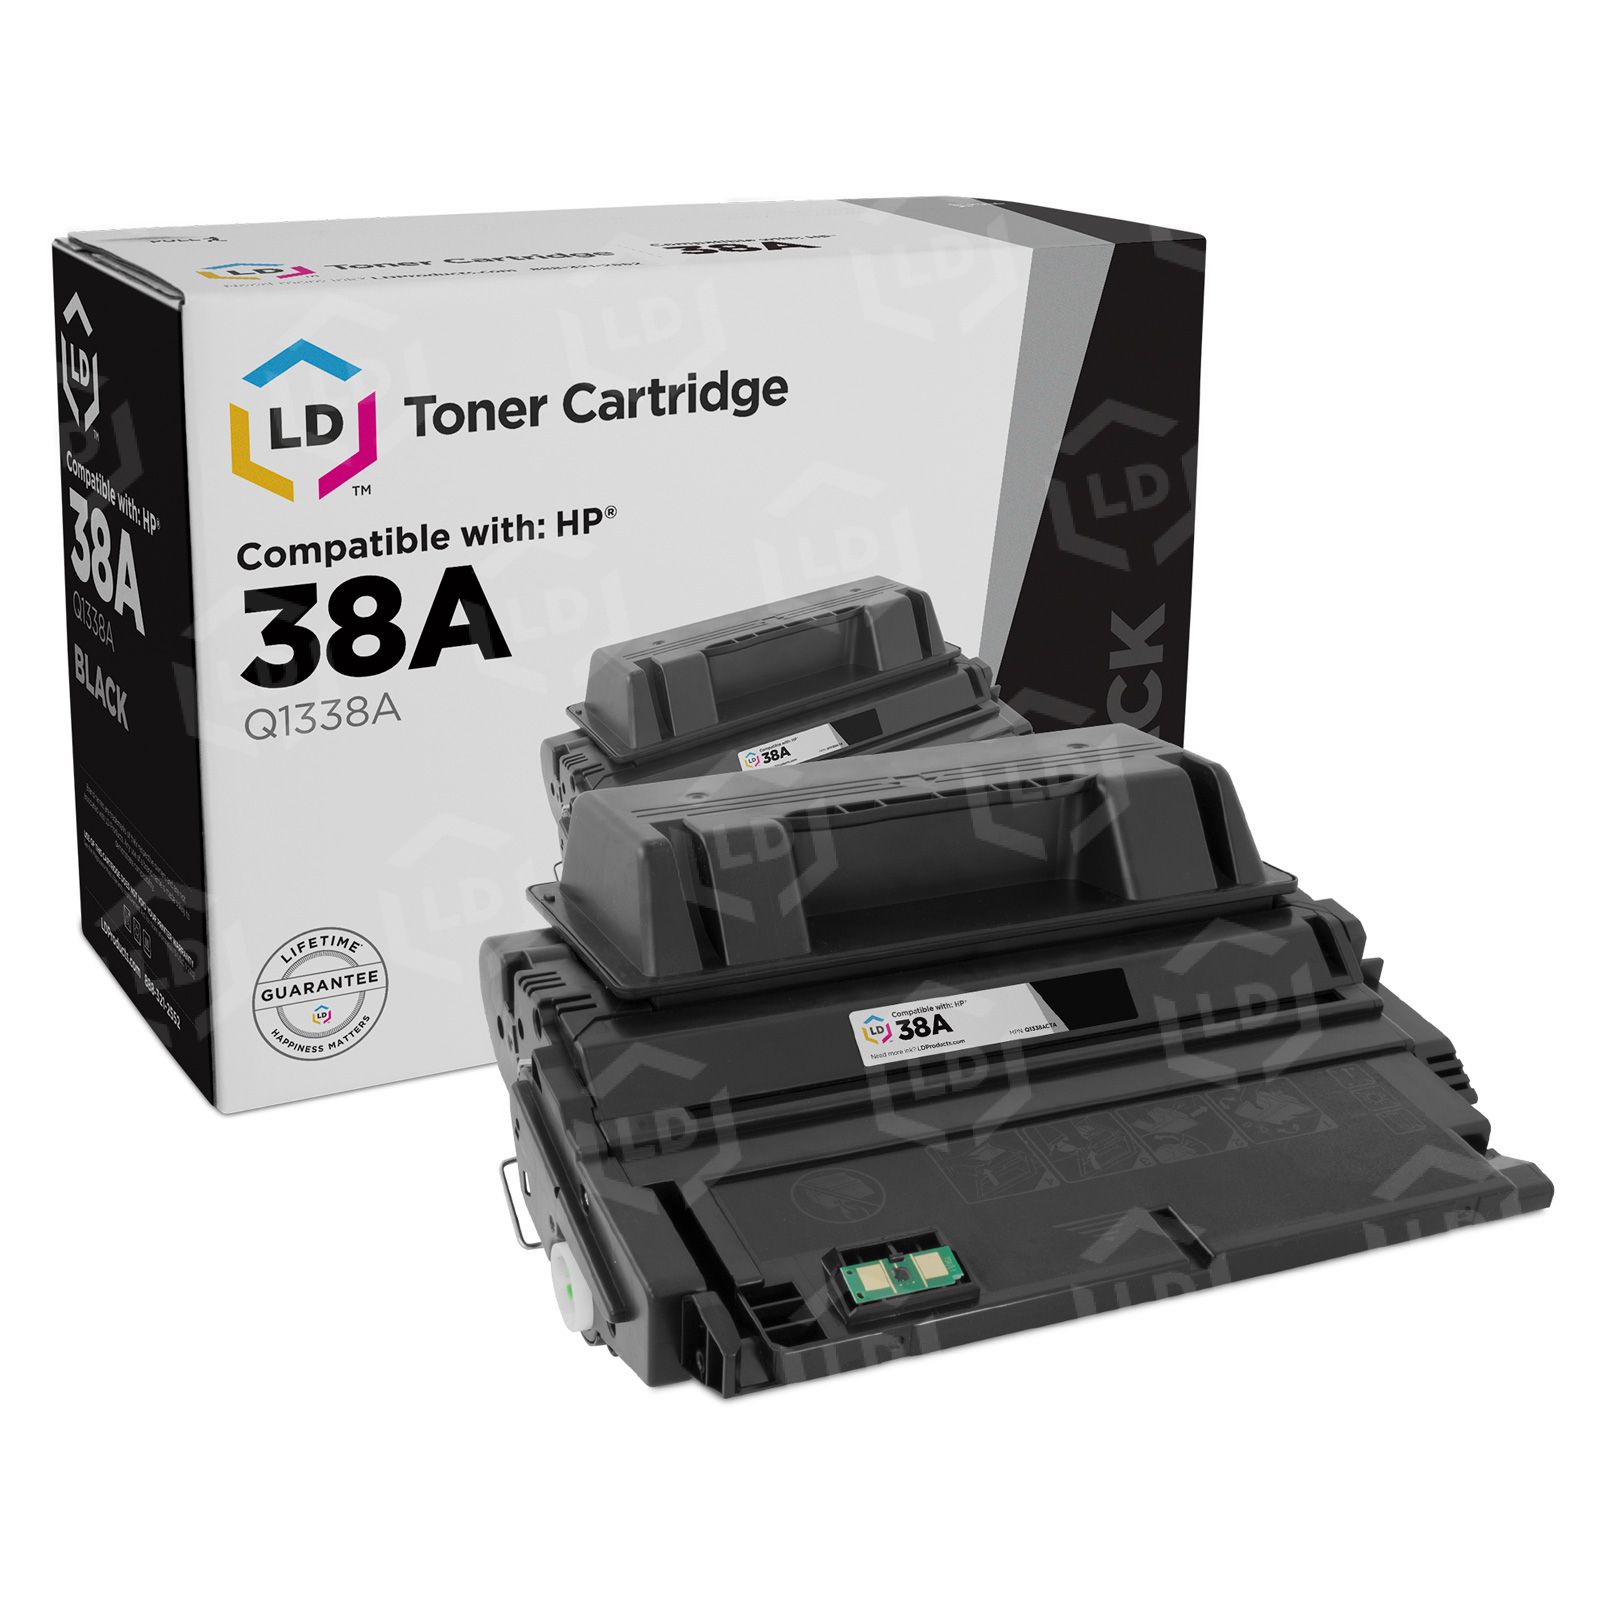 Toner HP 38A Original Q1338A Black Impressora HP LaserJet 4200, 4200n, 4200tn, 4200dtn, 4200dtns, 4200dtnsL, 4200Lvn